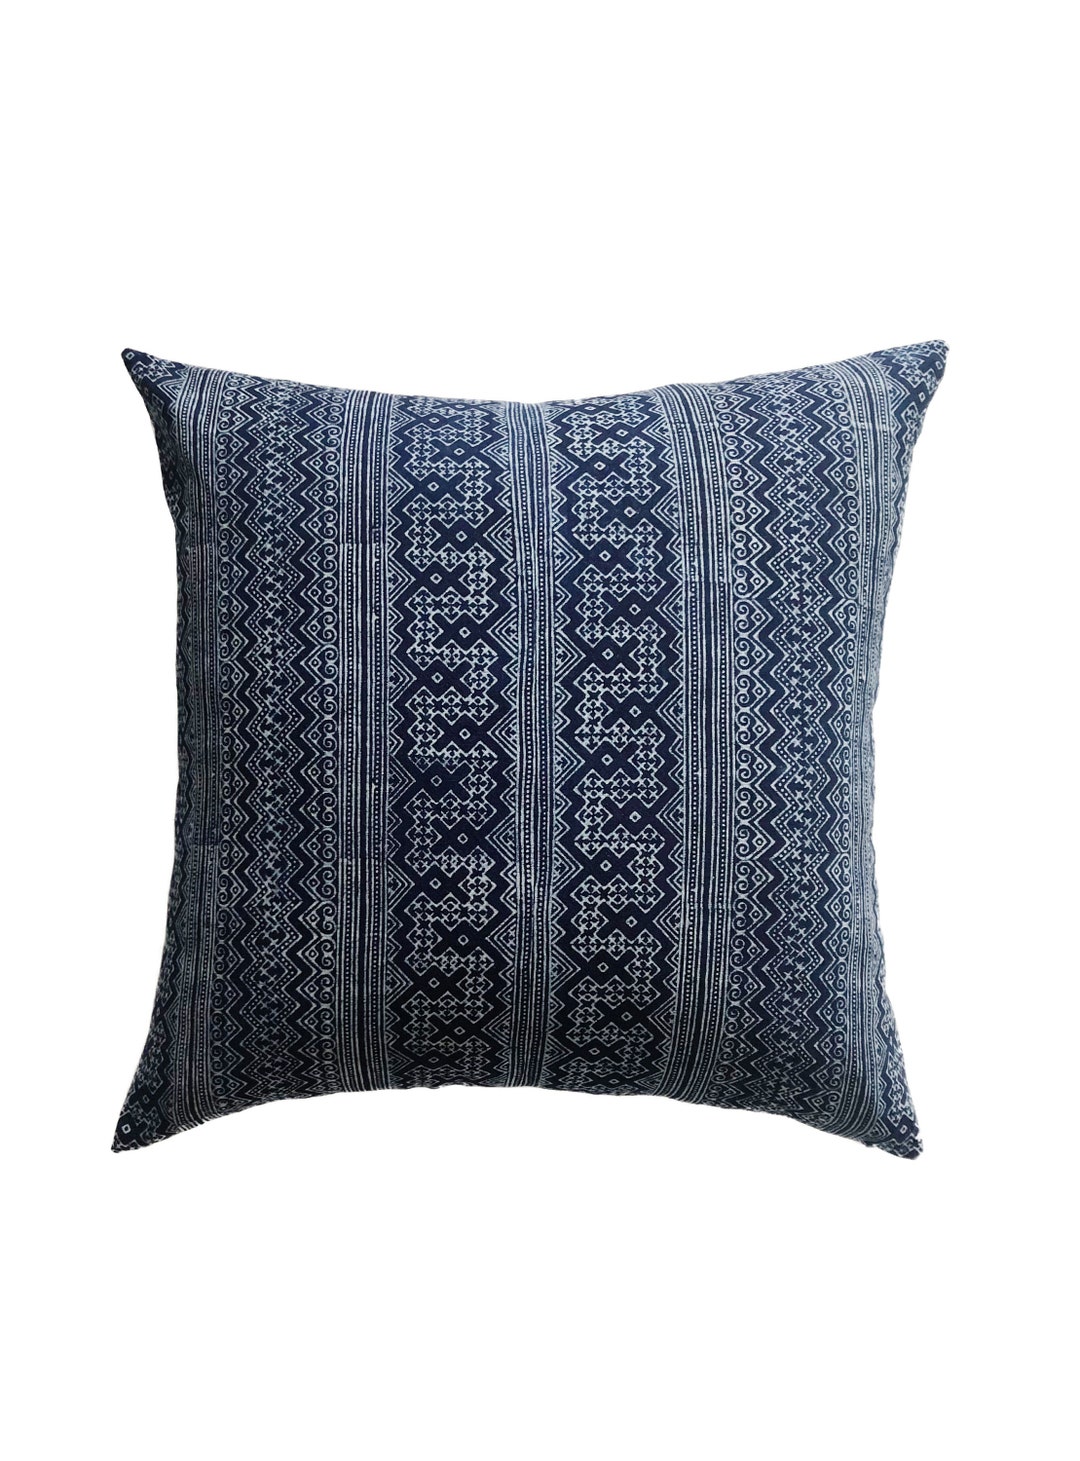 Blue Hmong Handblocked Tribal Pillow Cover // 26 X 26 No. 0199 - Etsy